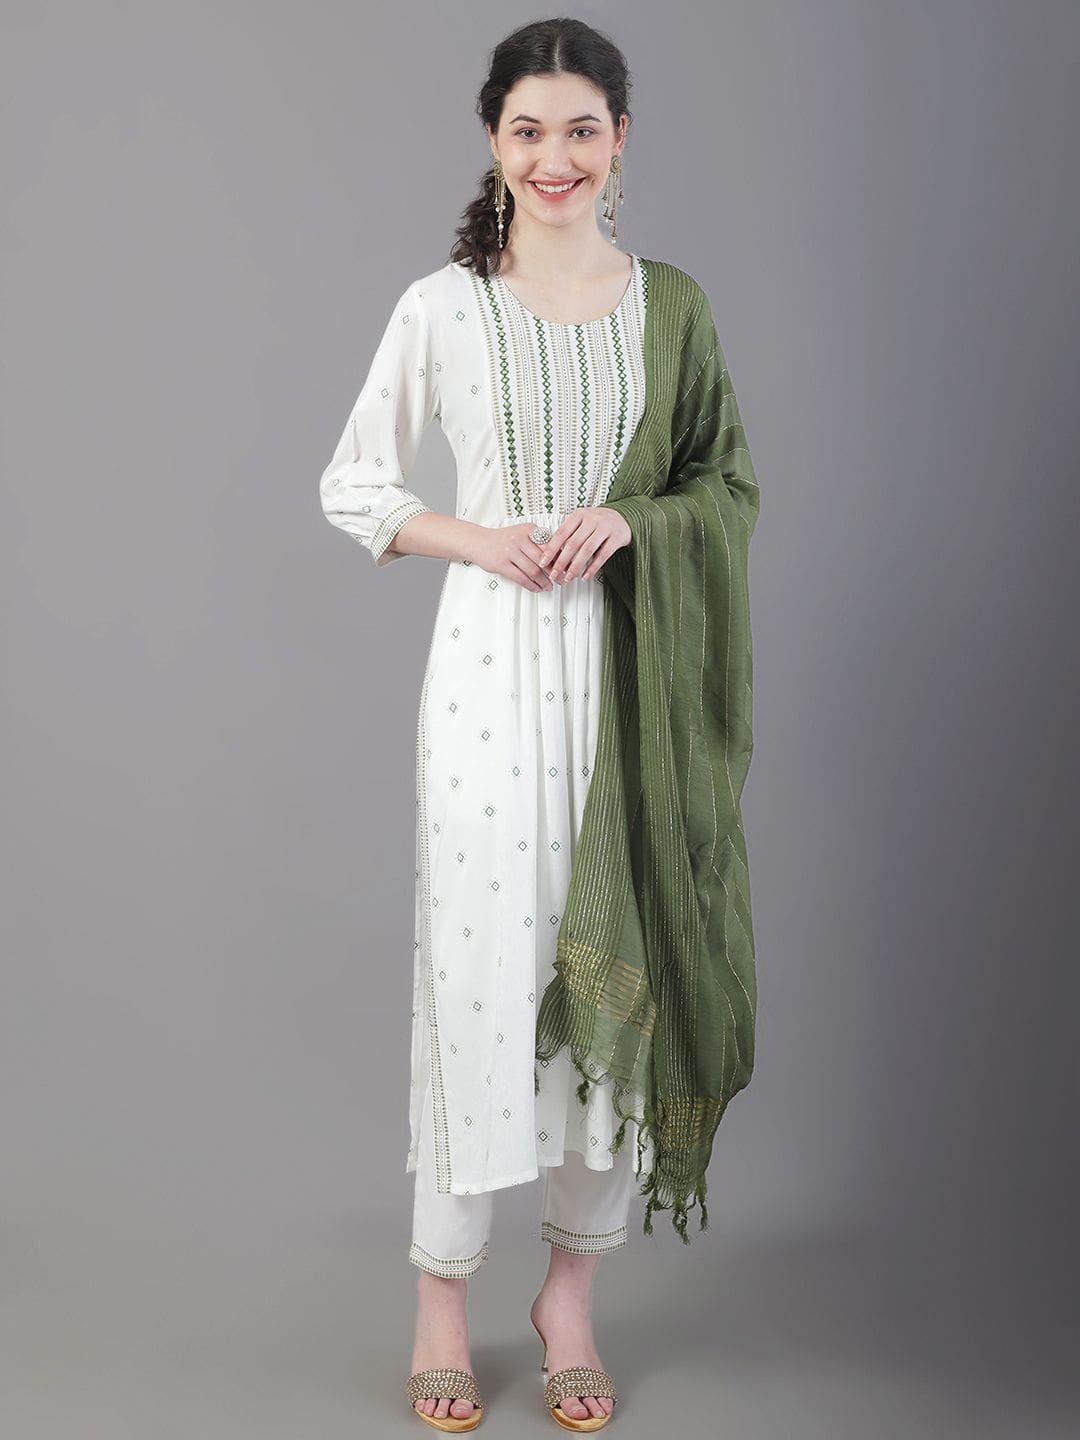 Classy White And Green Rayon Kurti For Women